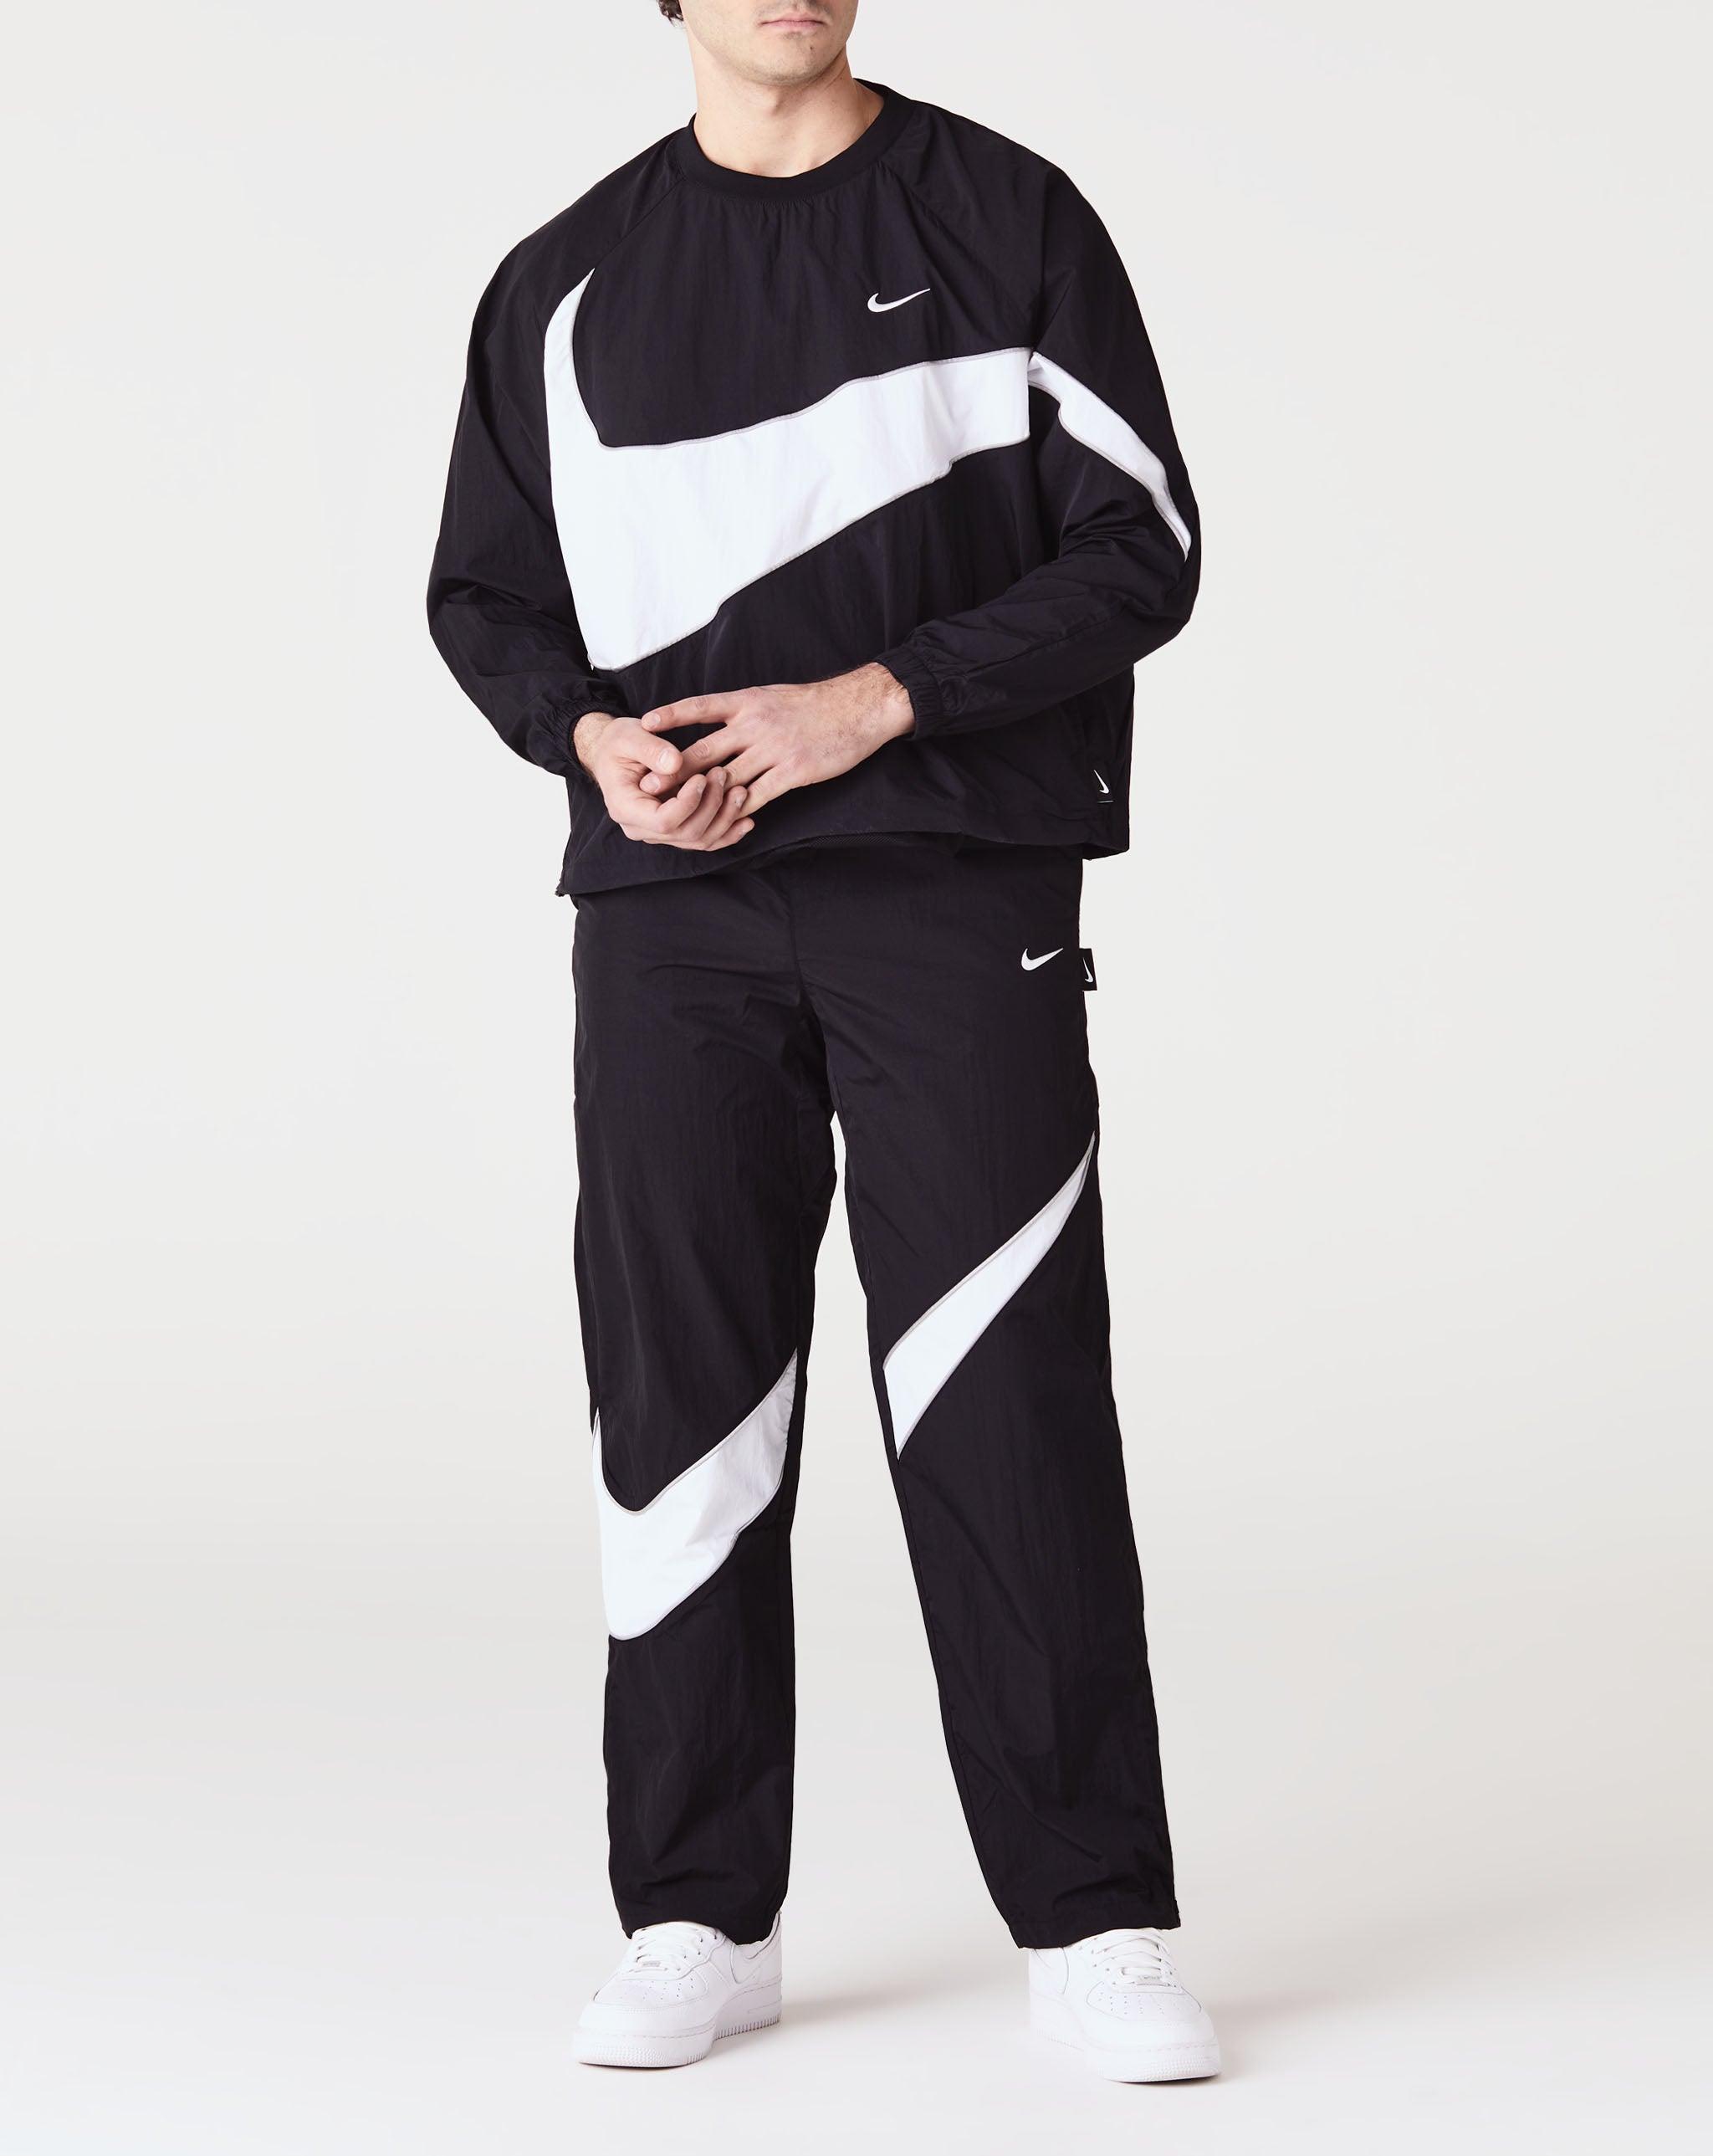 Nike Swoosh Woven Pants - Rule of Next Apparel